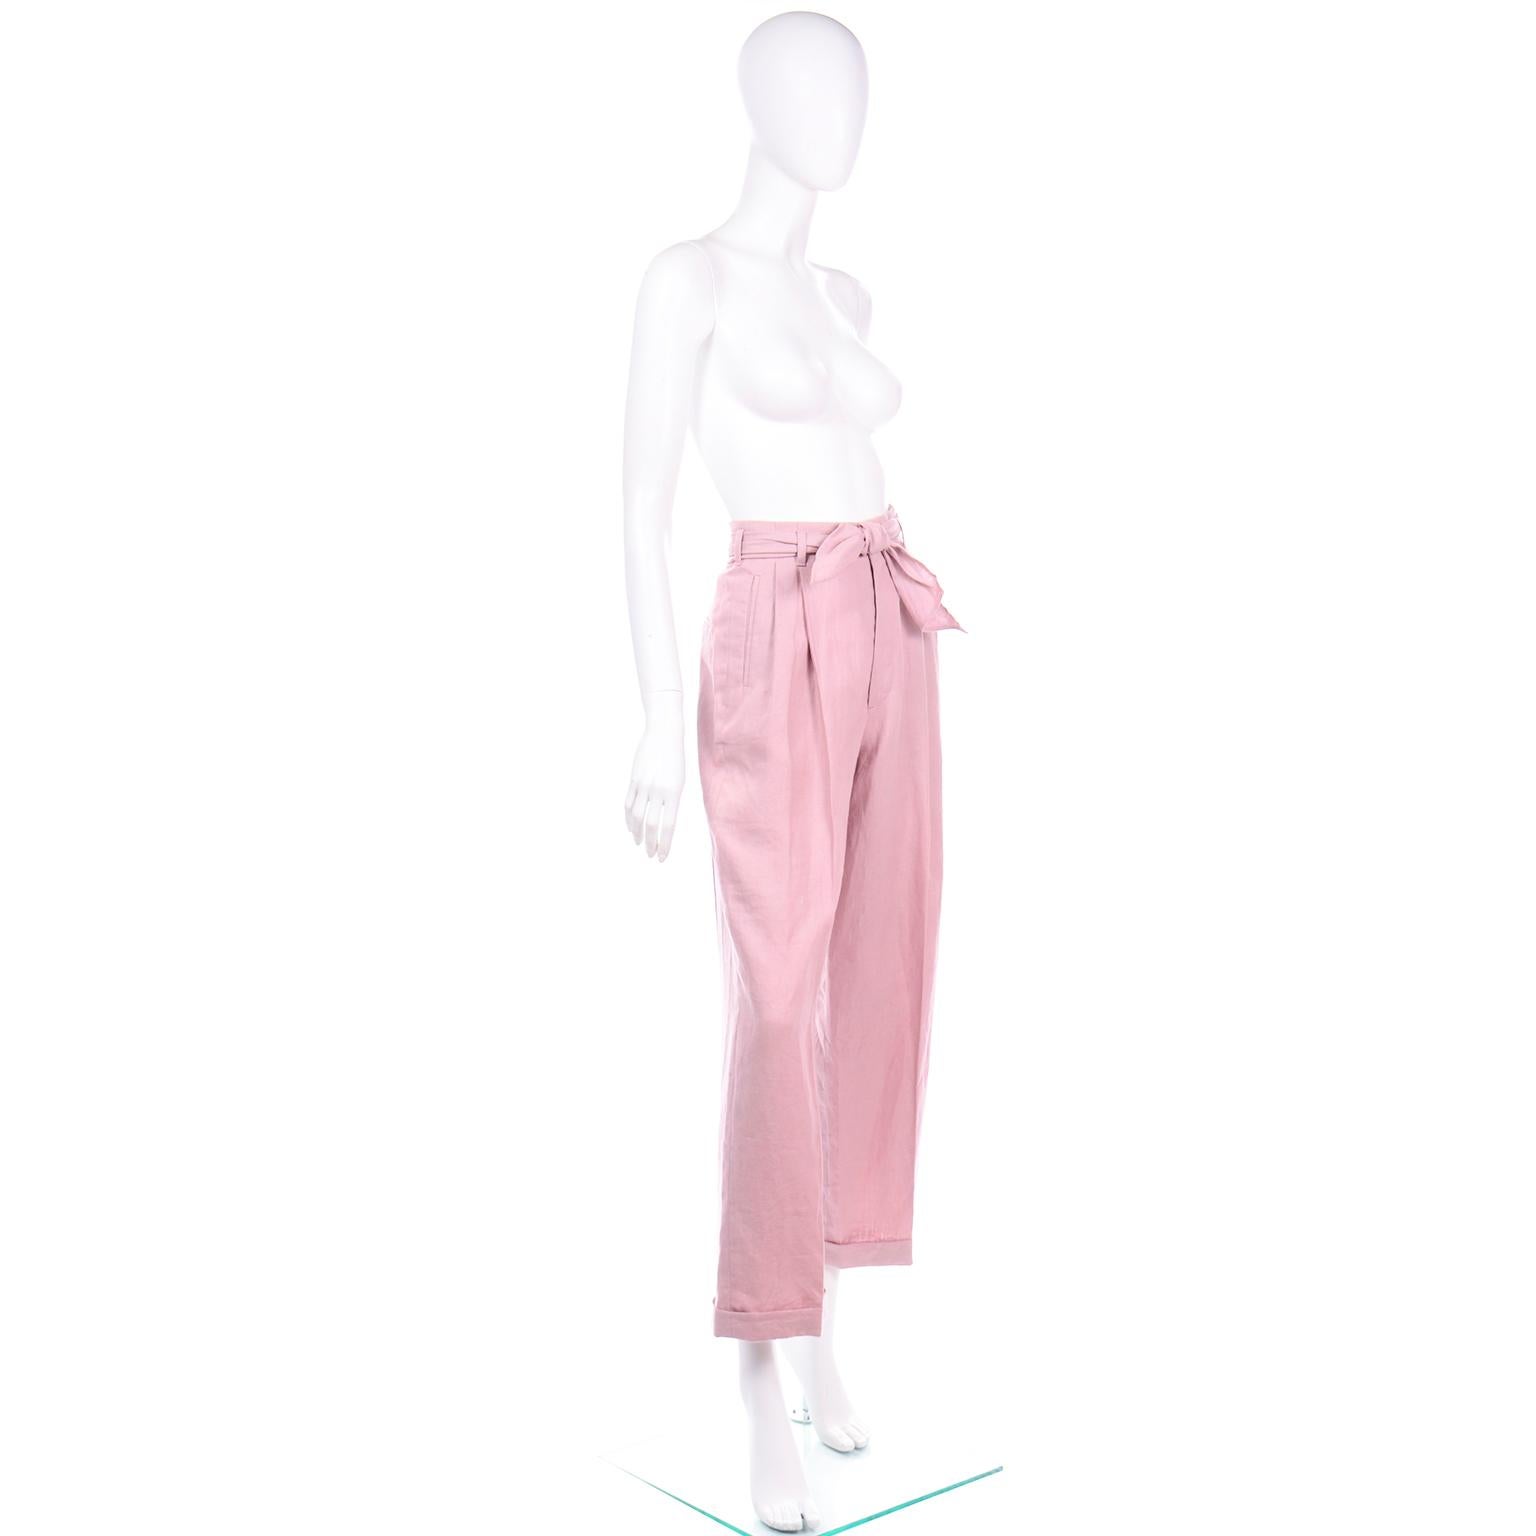 pink linen pants